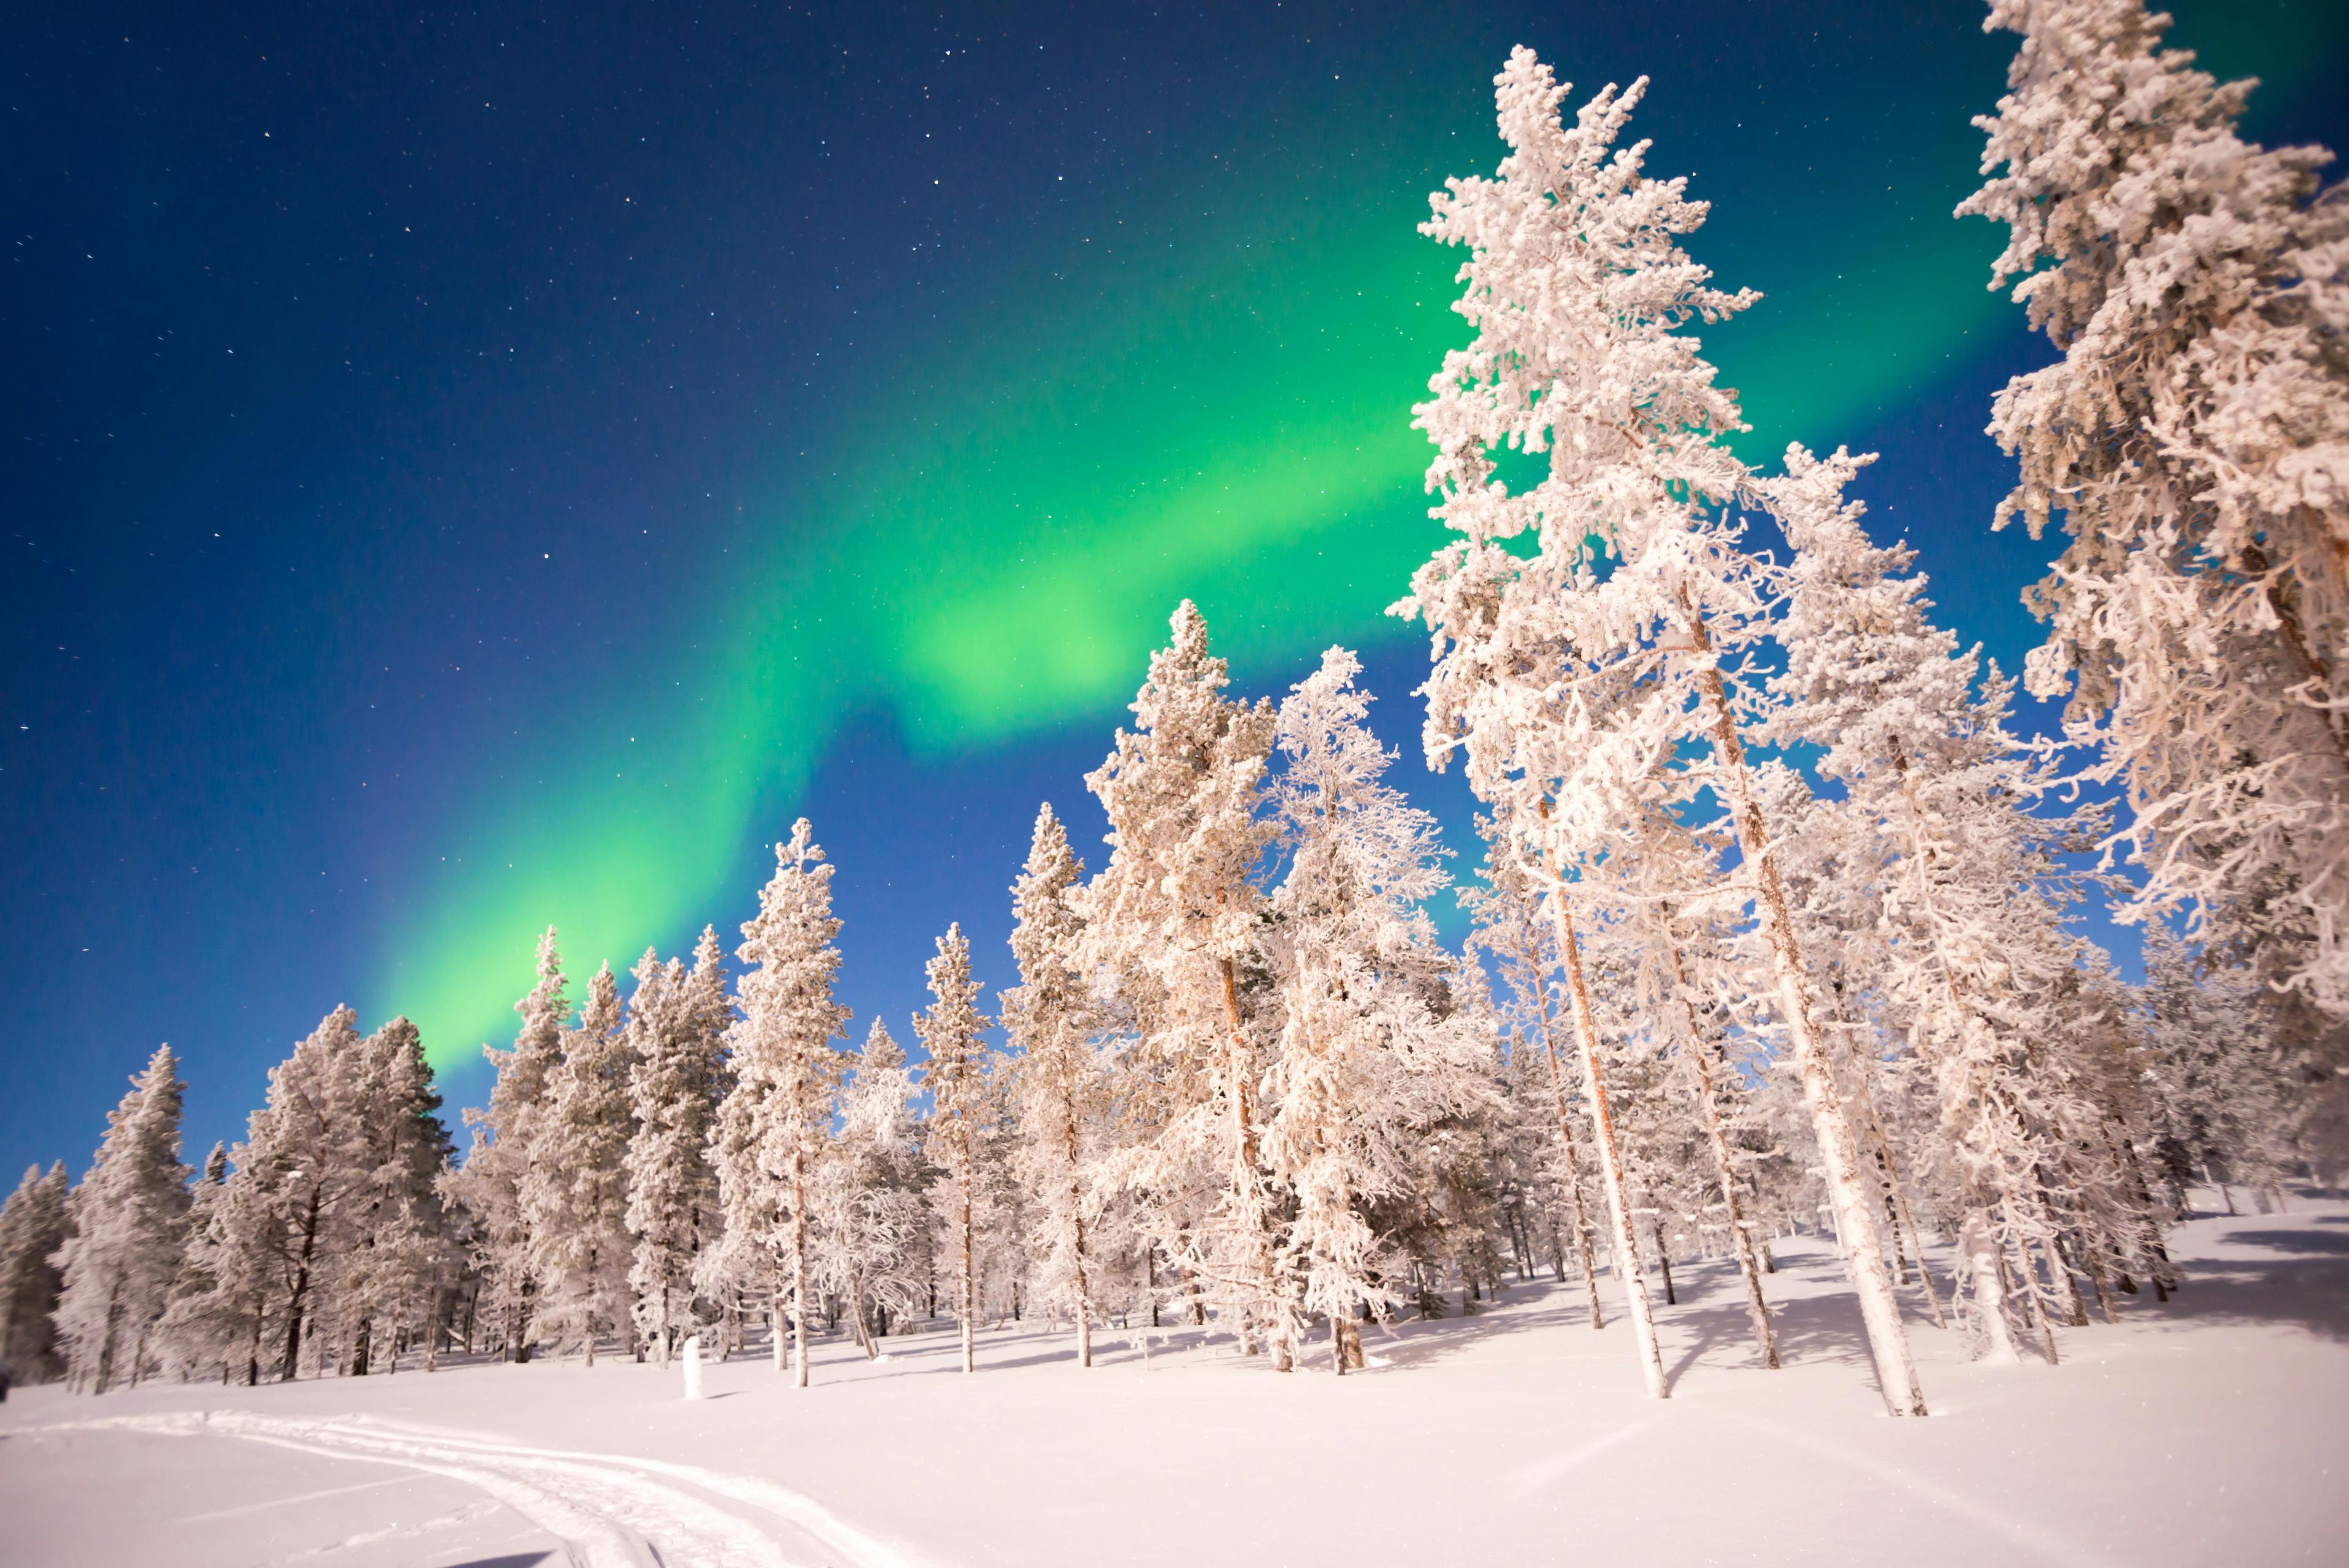 Imagen del tour: Cazando auroras boreales con barbacoa lapona